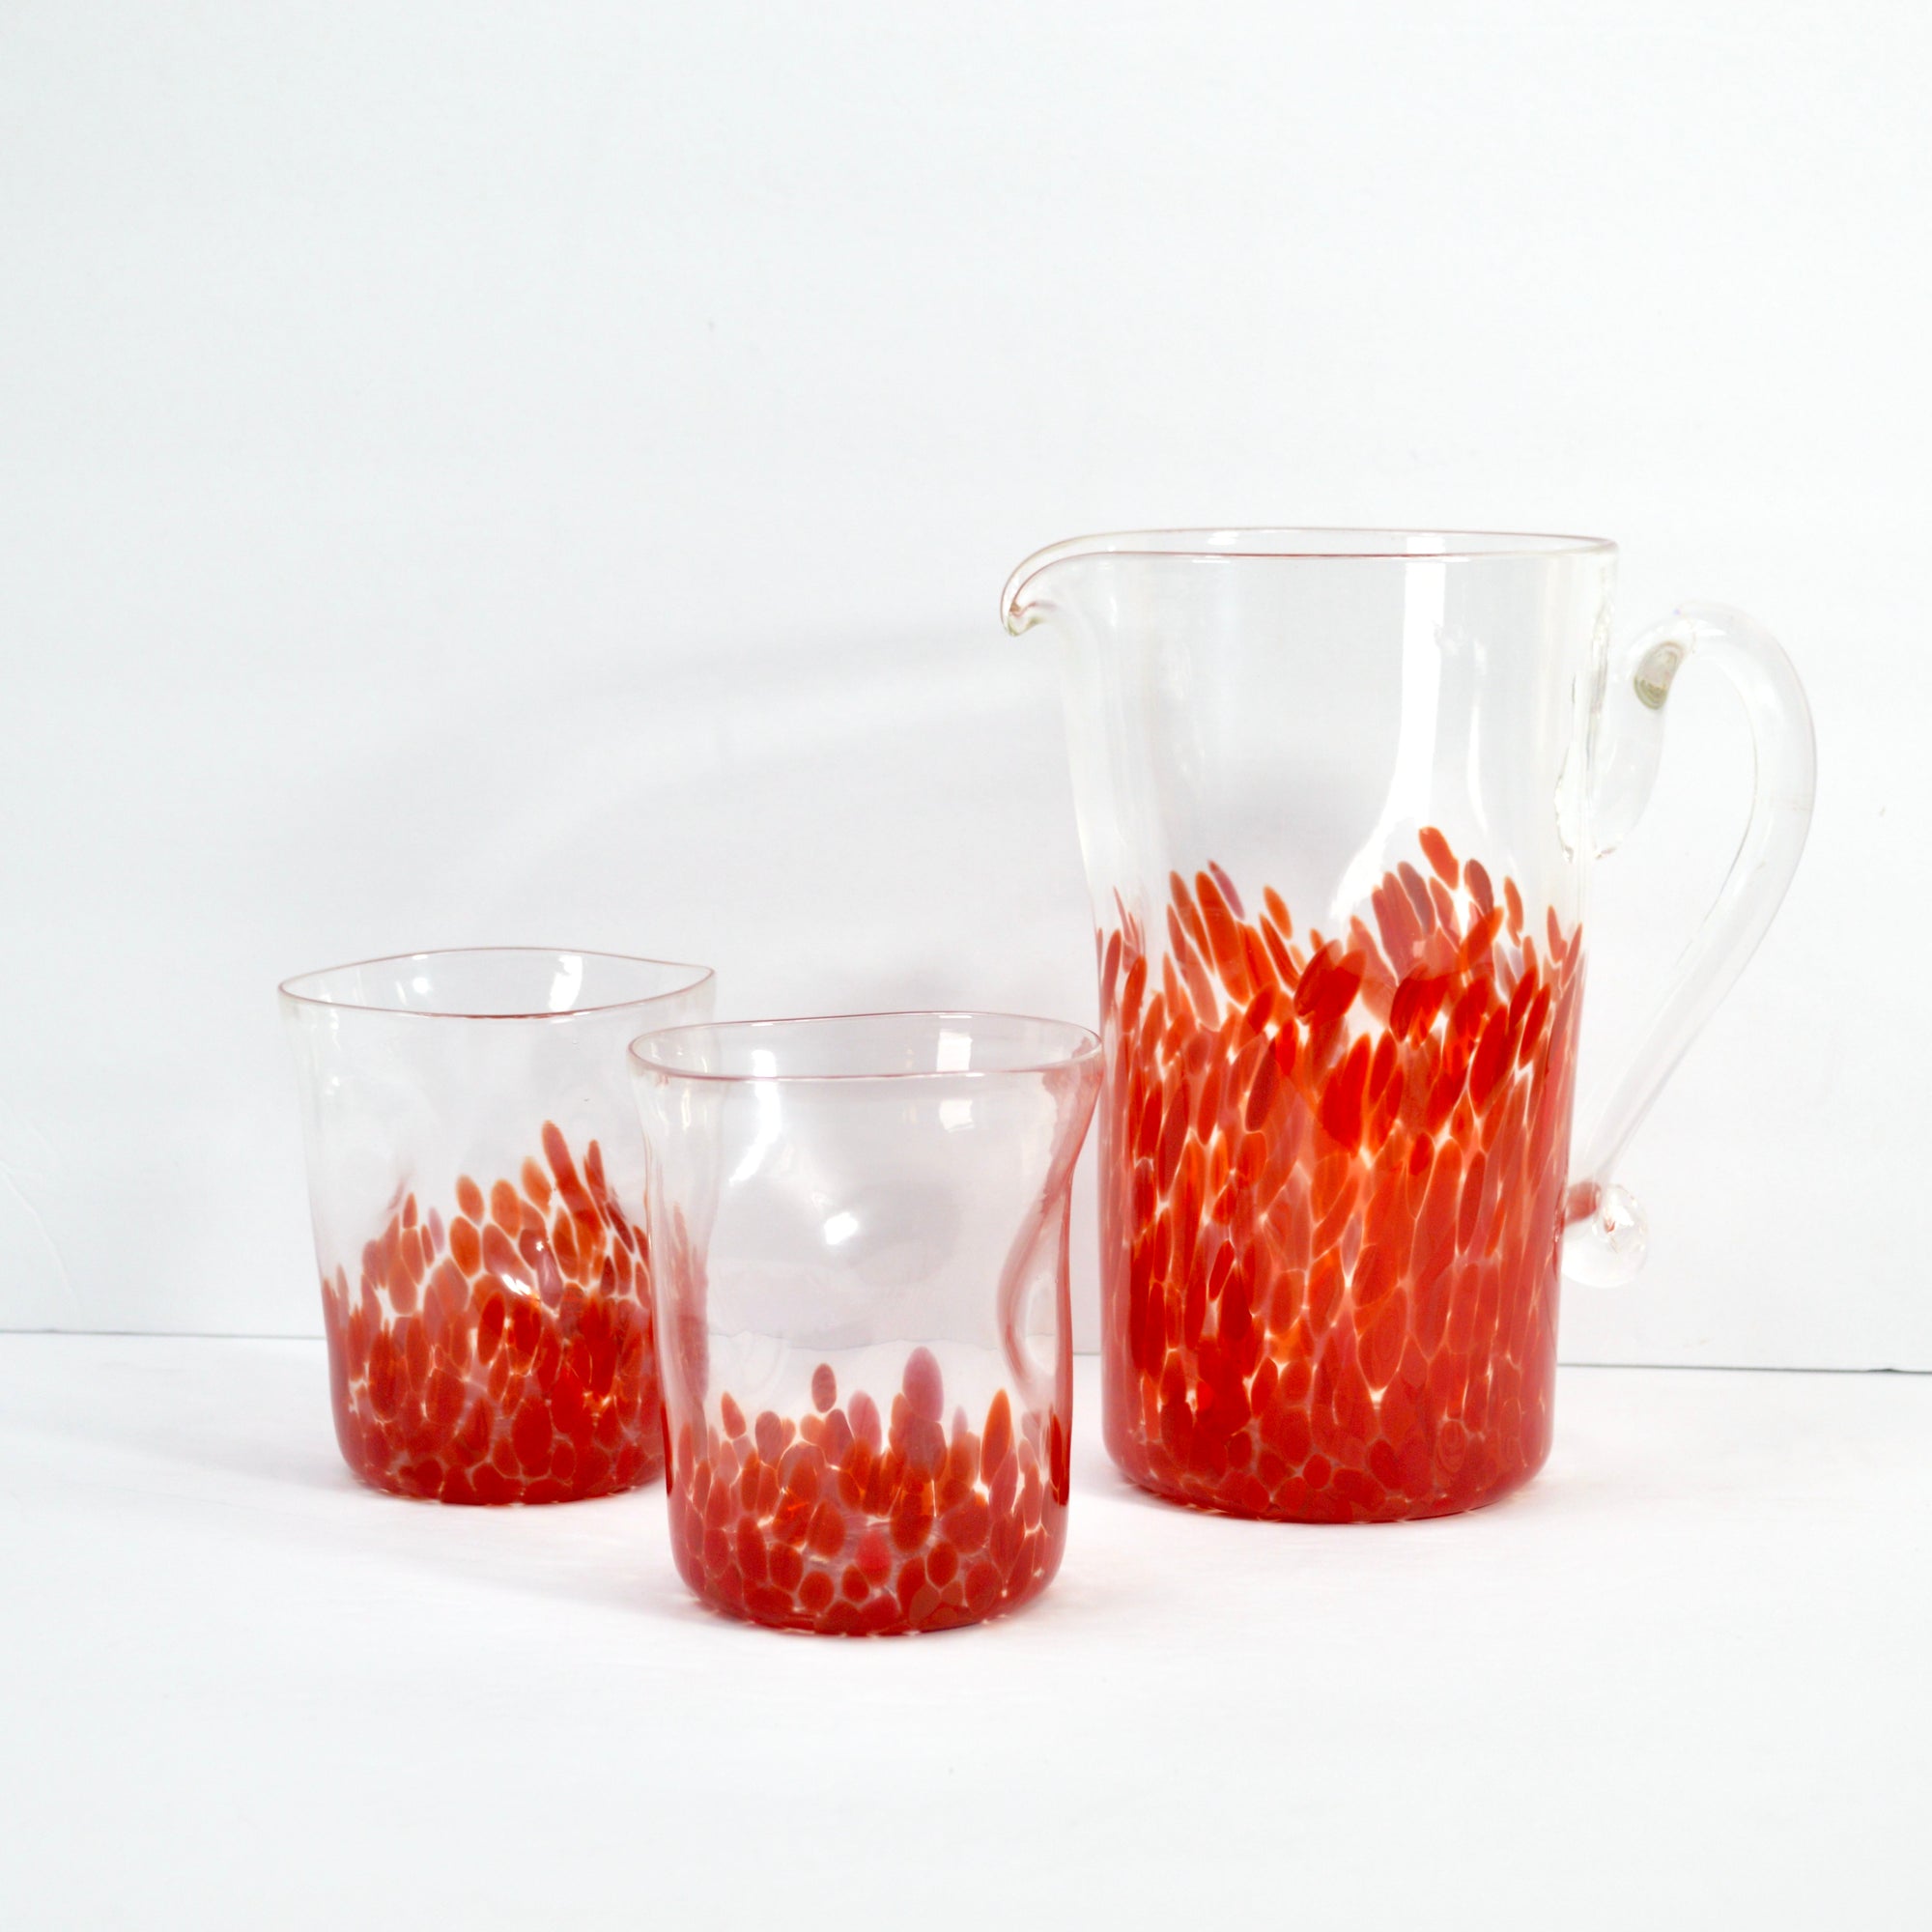 Allegra Murano Glass Pitcher & Glasses Set, Red, Made in Italy - My Italian Decor